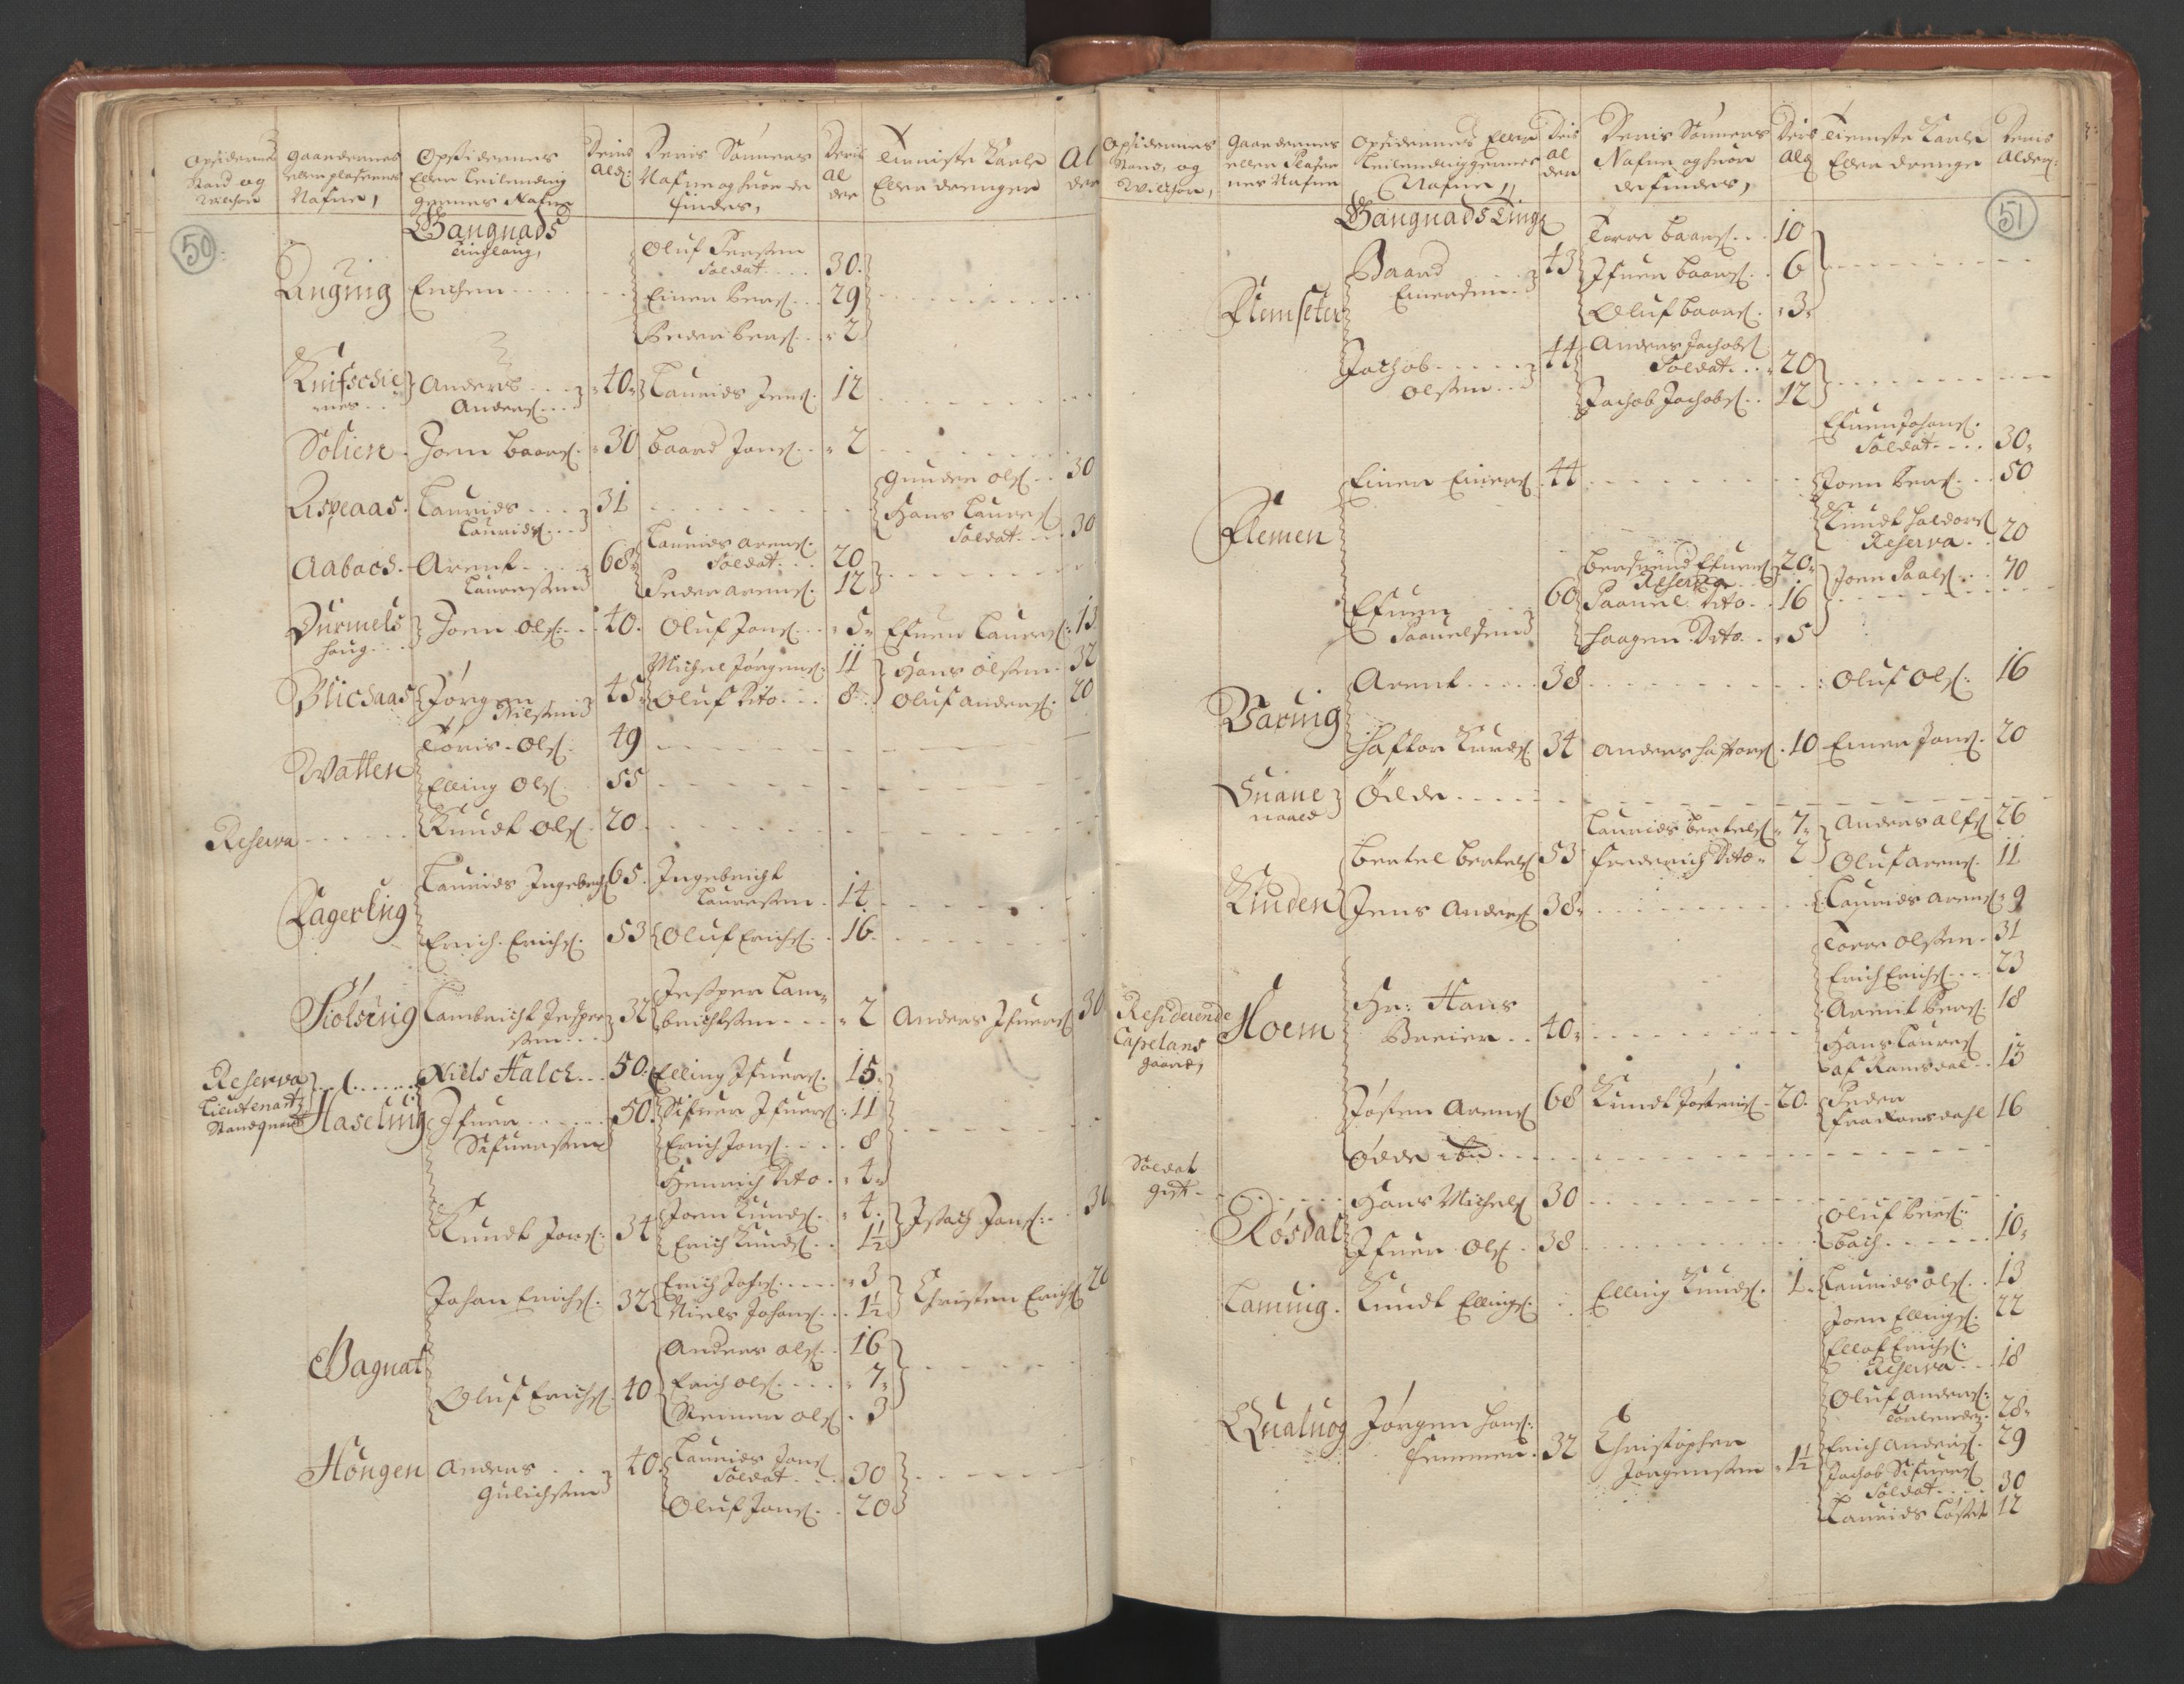 RA, Census (manntall) 1701, no. 11: Nordmøre fogderi and Romsdal fogderi, 1701, p. 50-51